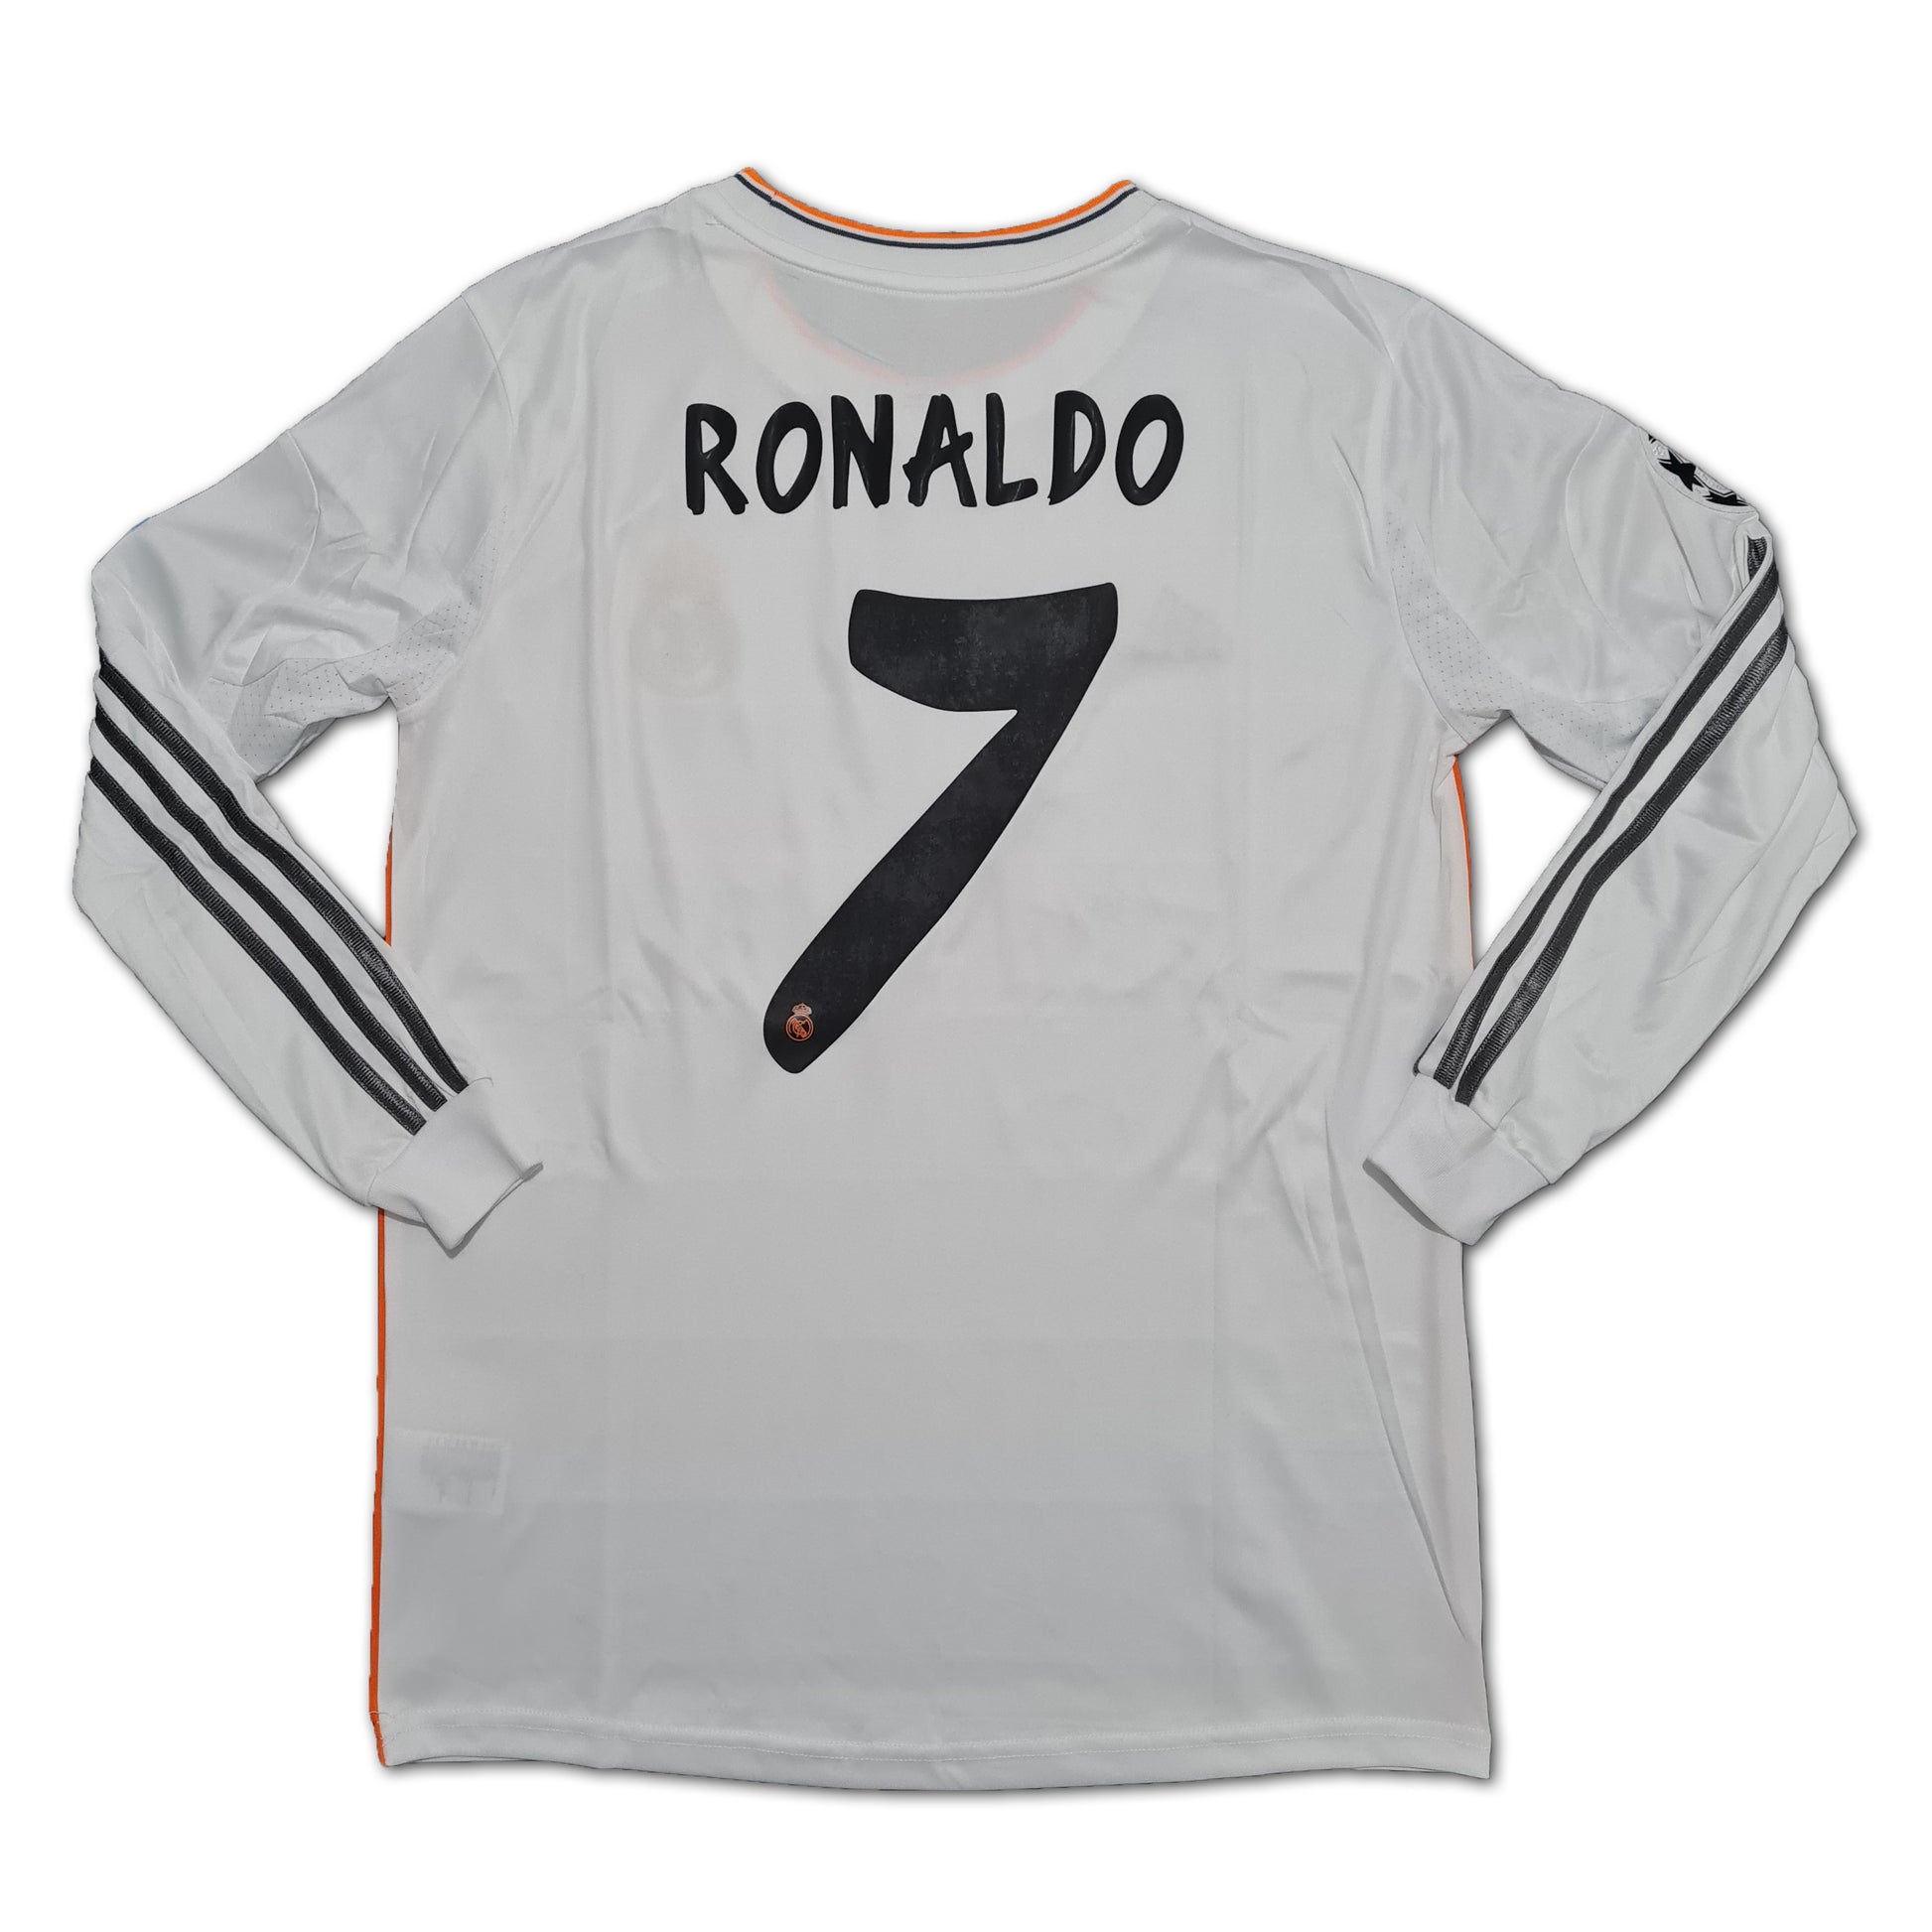 Real Madrid Titular 2013/14 - Ronaldo - Thunder Internacional